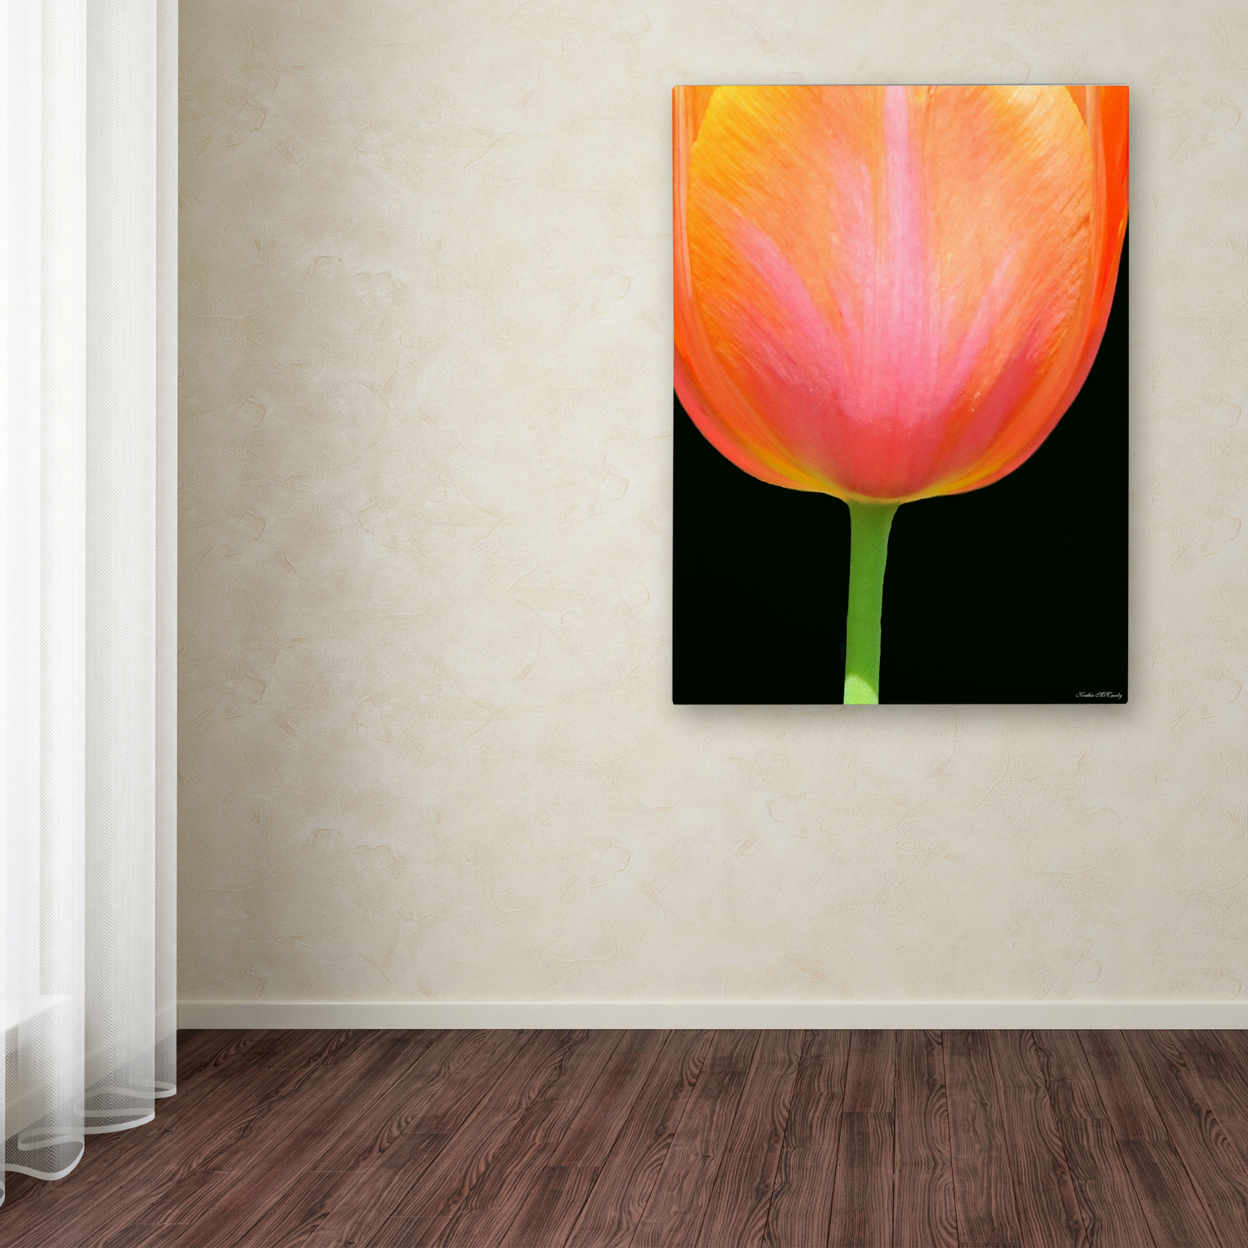 Kathie McCurdy 'Orange Tulip' Canvas Wall Art 35 X 47 Inches